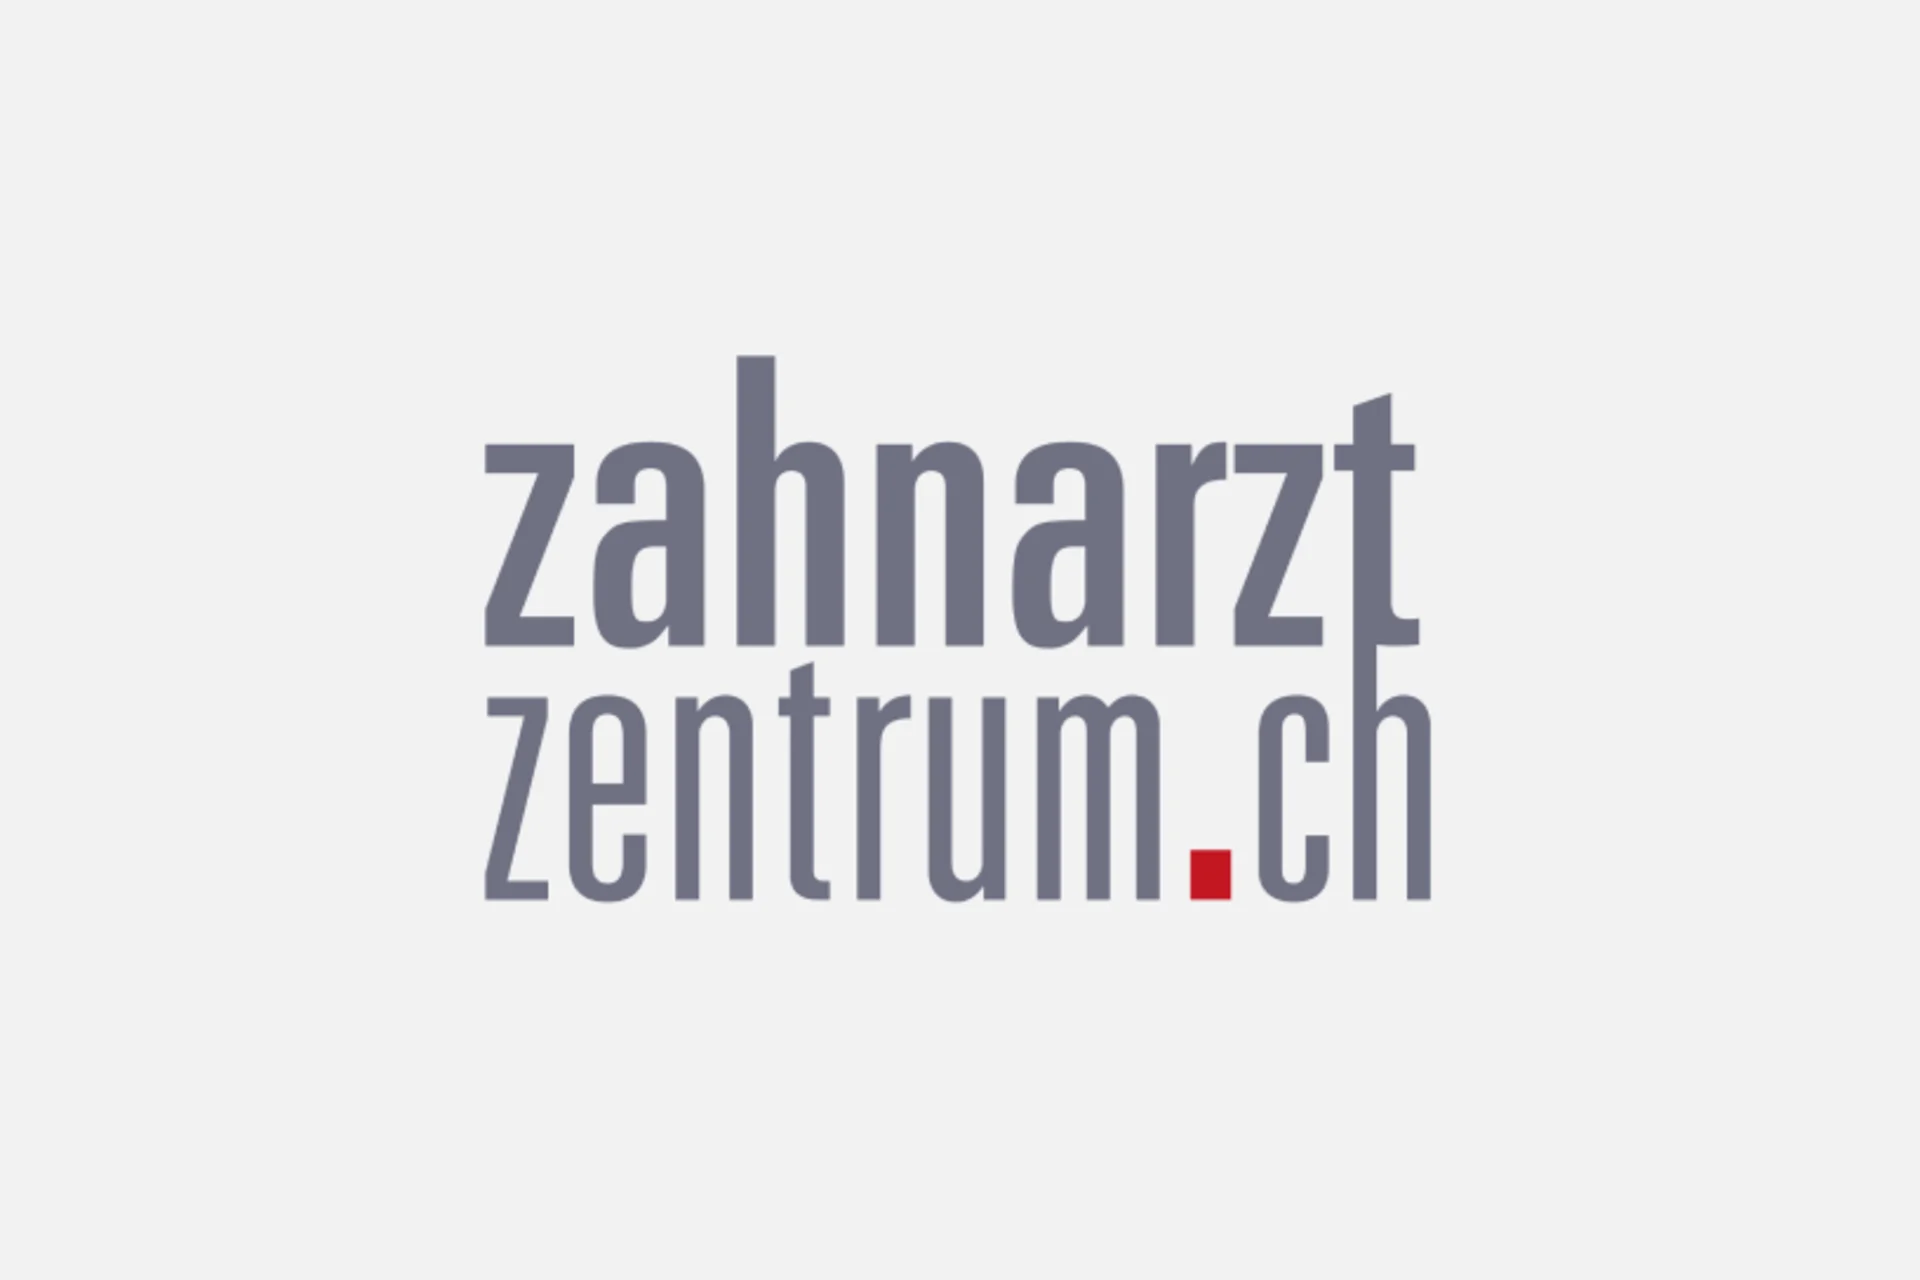 Zahnarztzentrum.ch logo